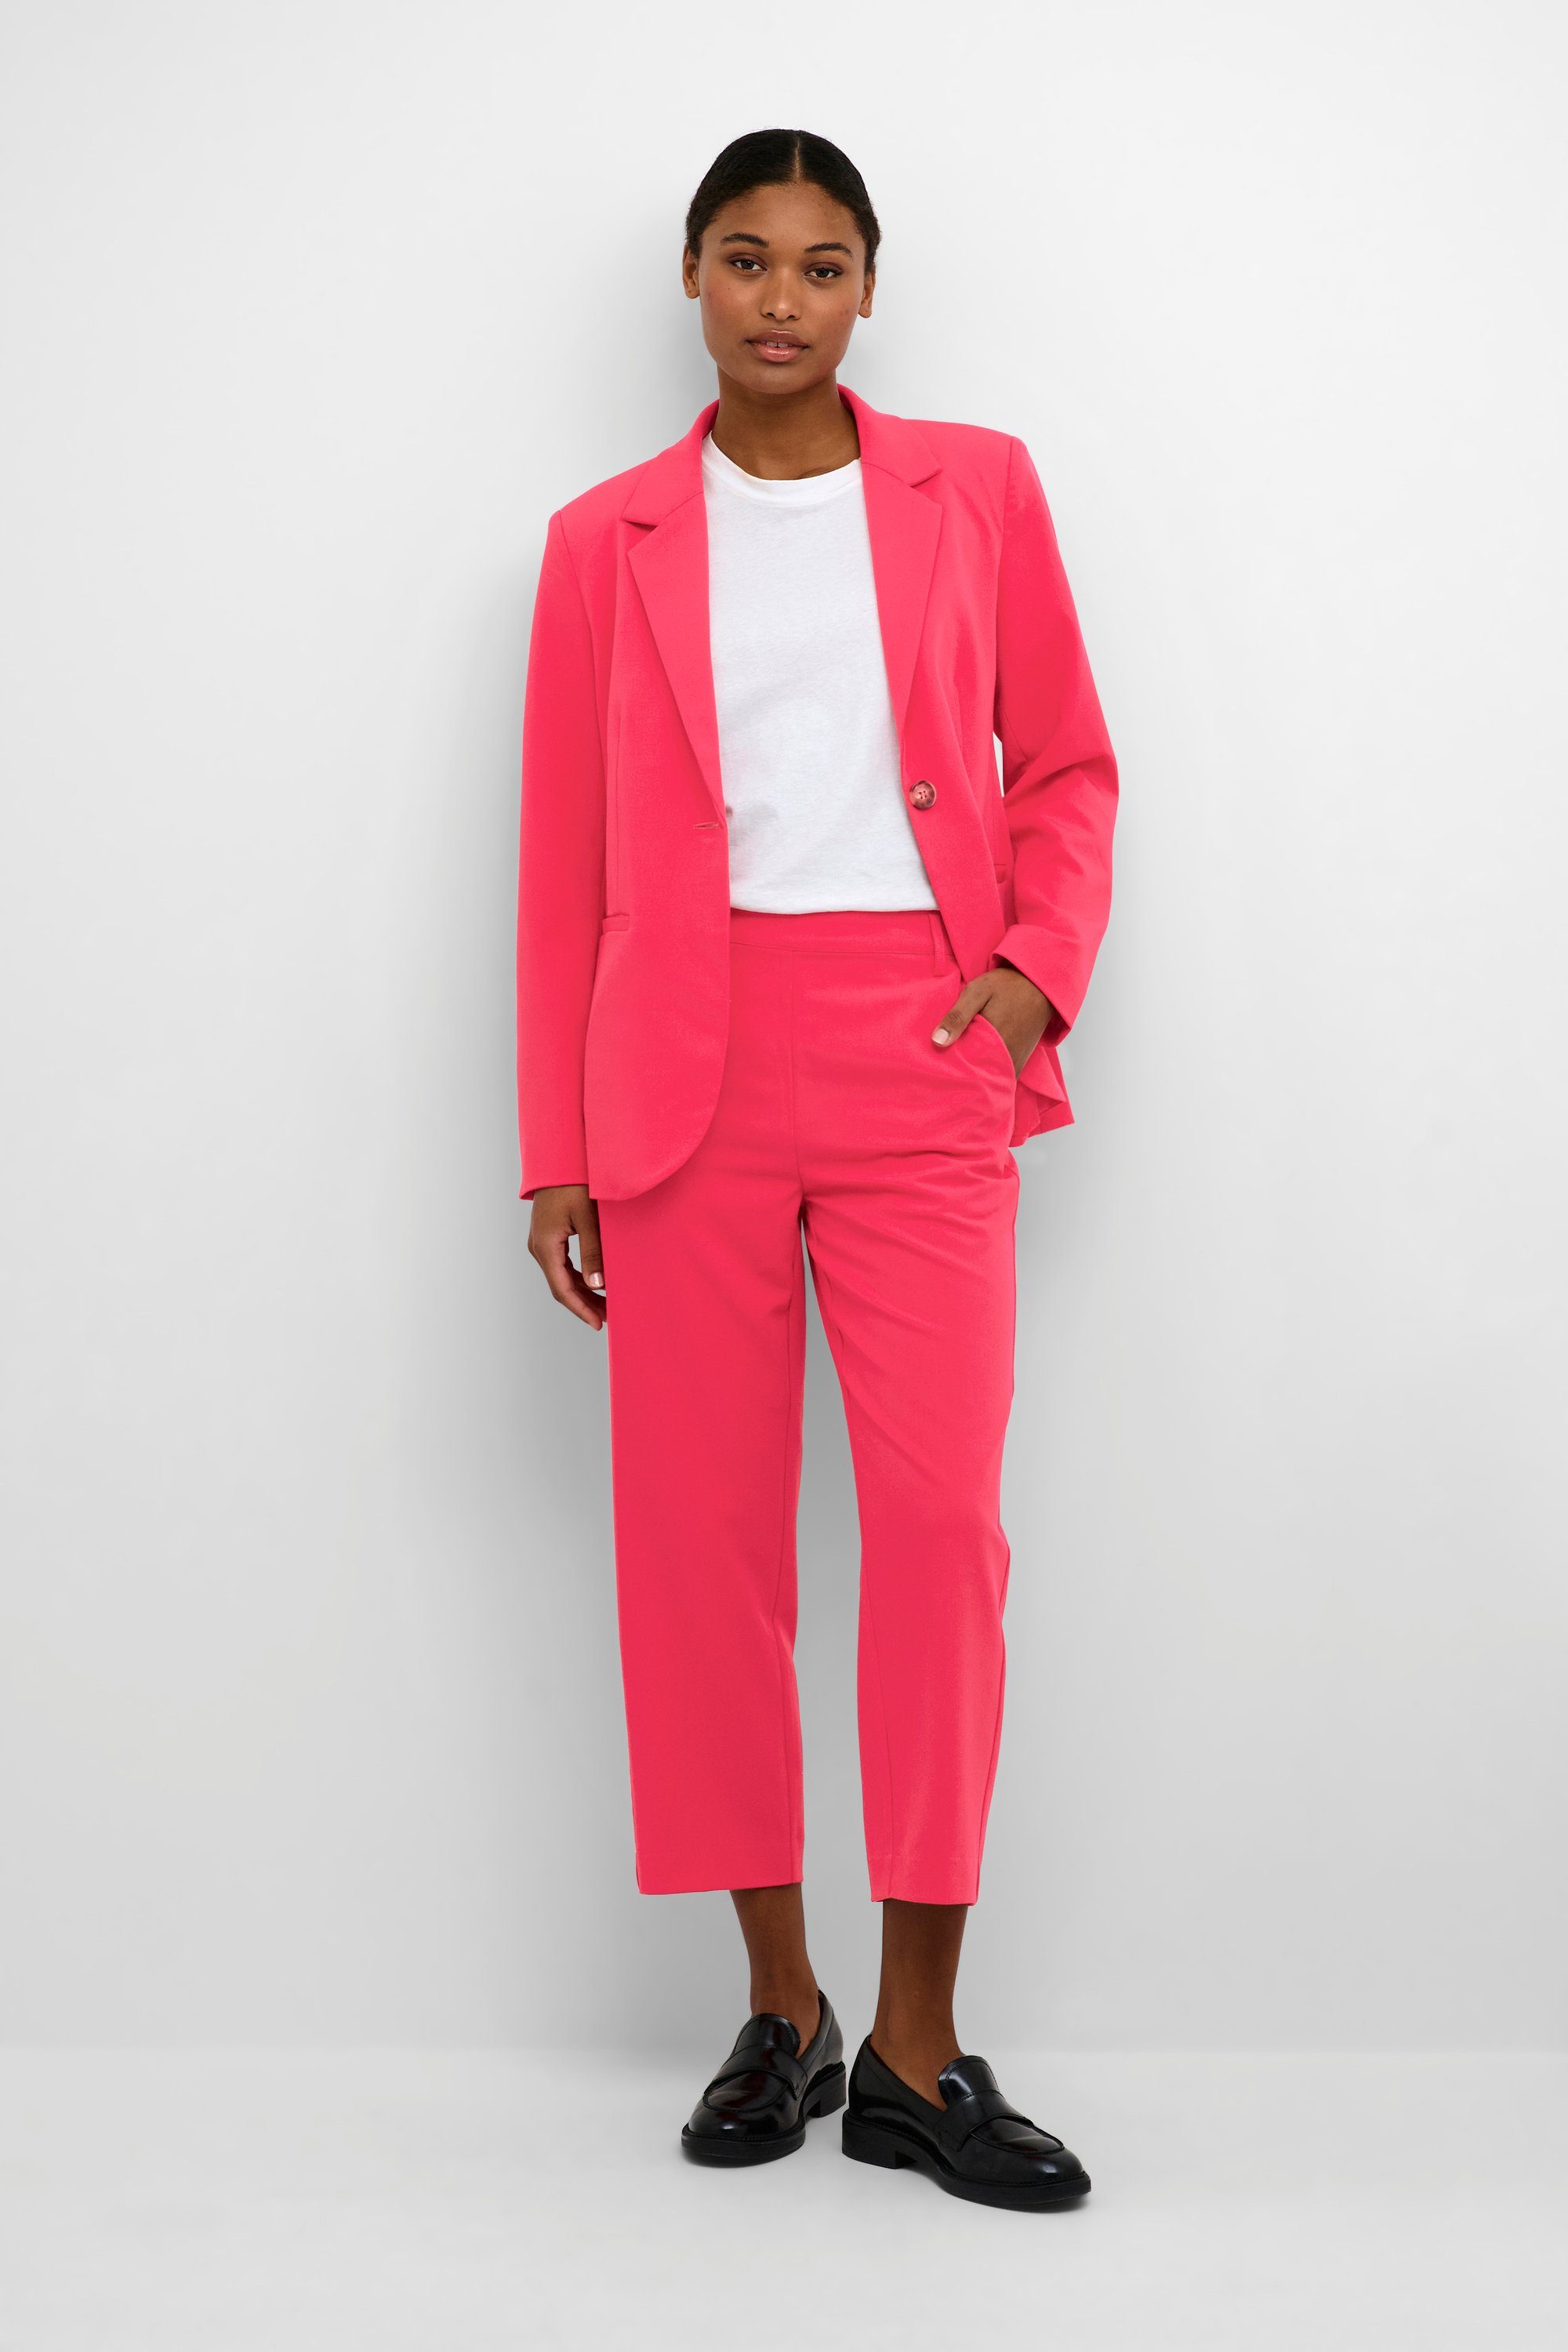 KAsakura KAFFE Pink Virtual Suiting Pants Anzughose